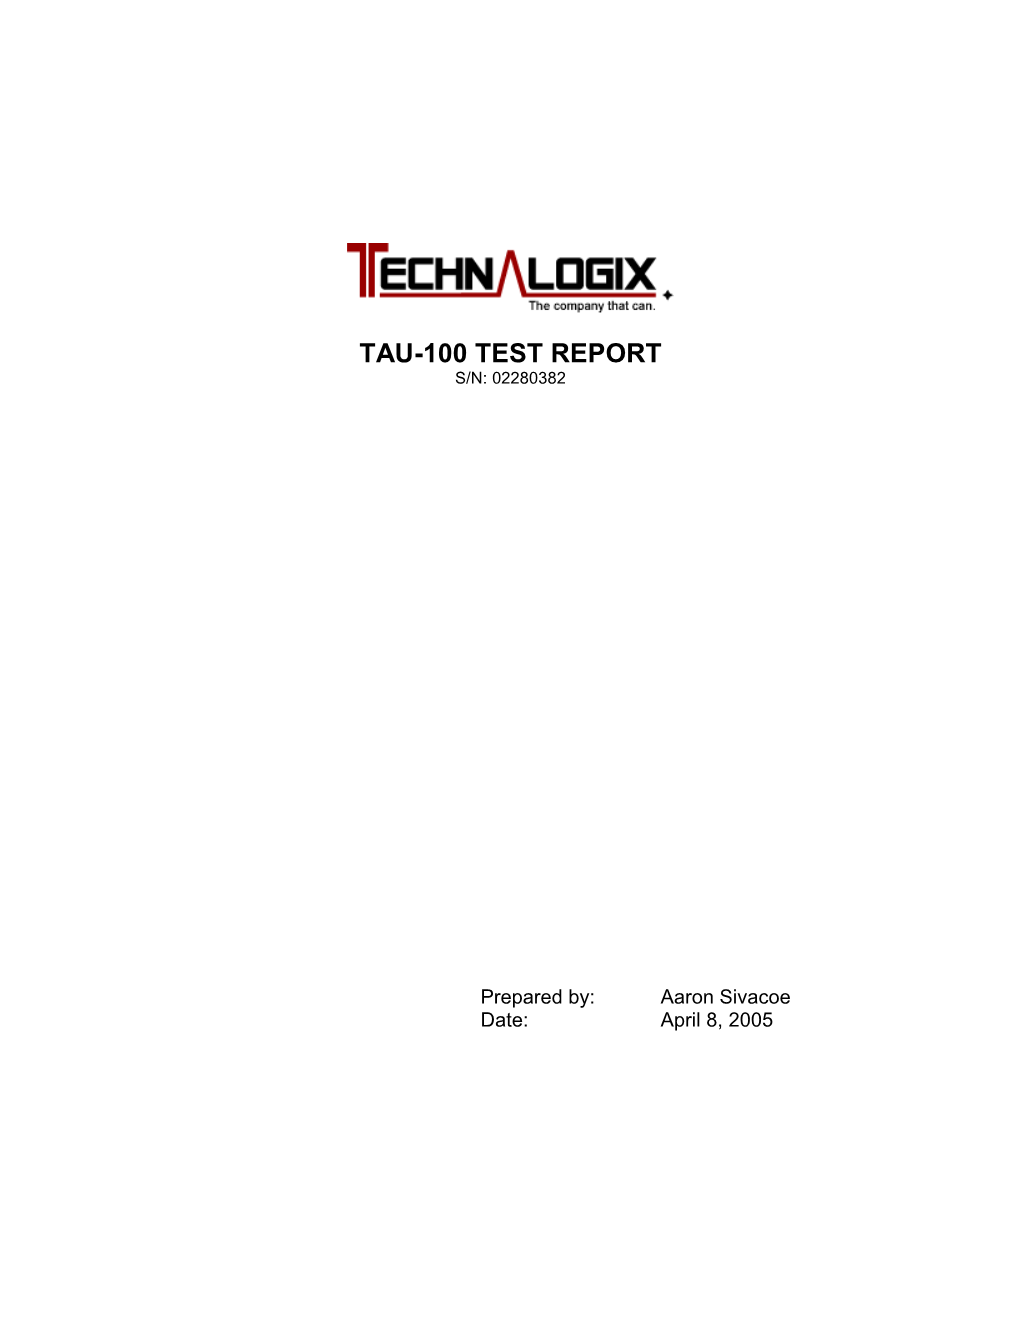 Tau-100 Test Report S/N: 02280382